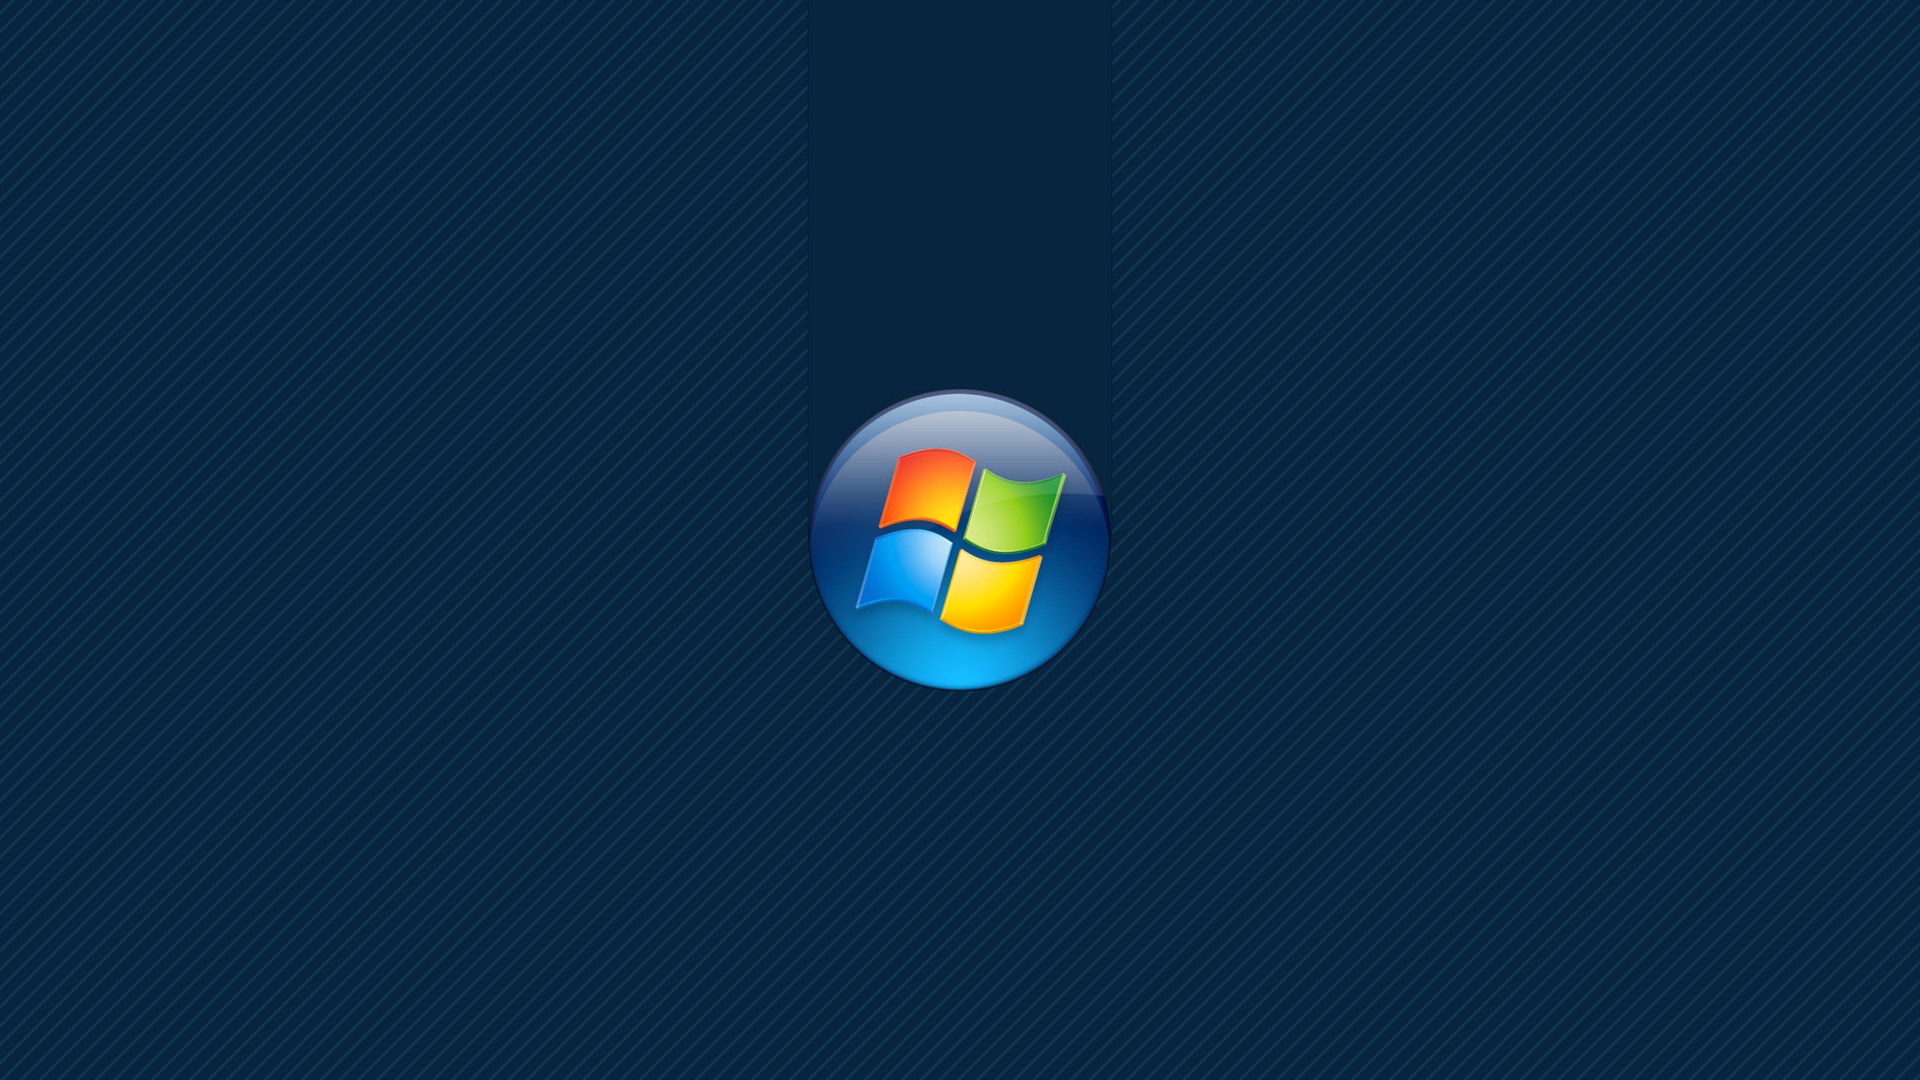 Download Windows logo wallpaper